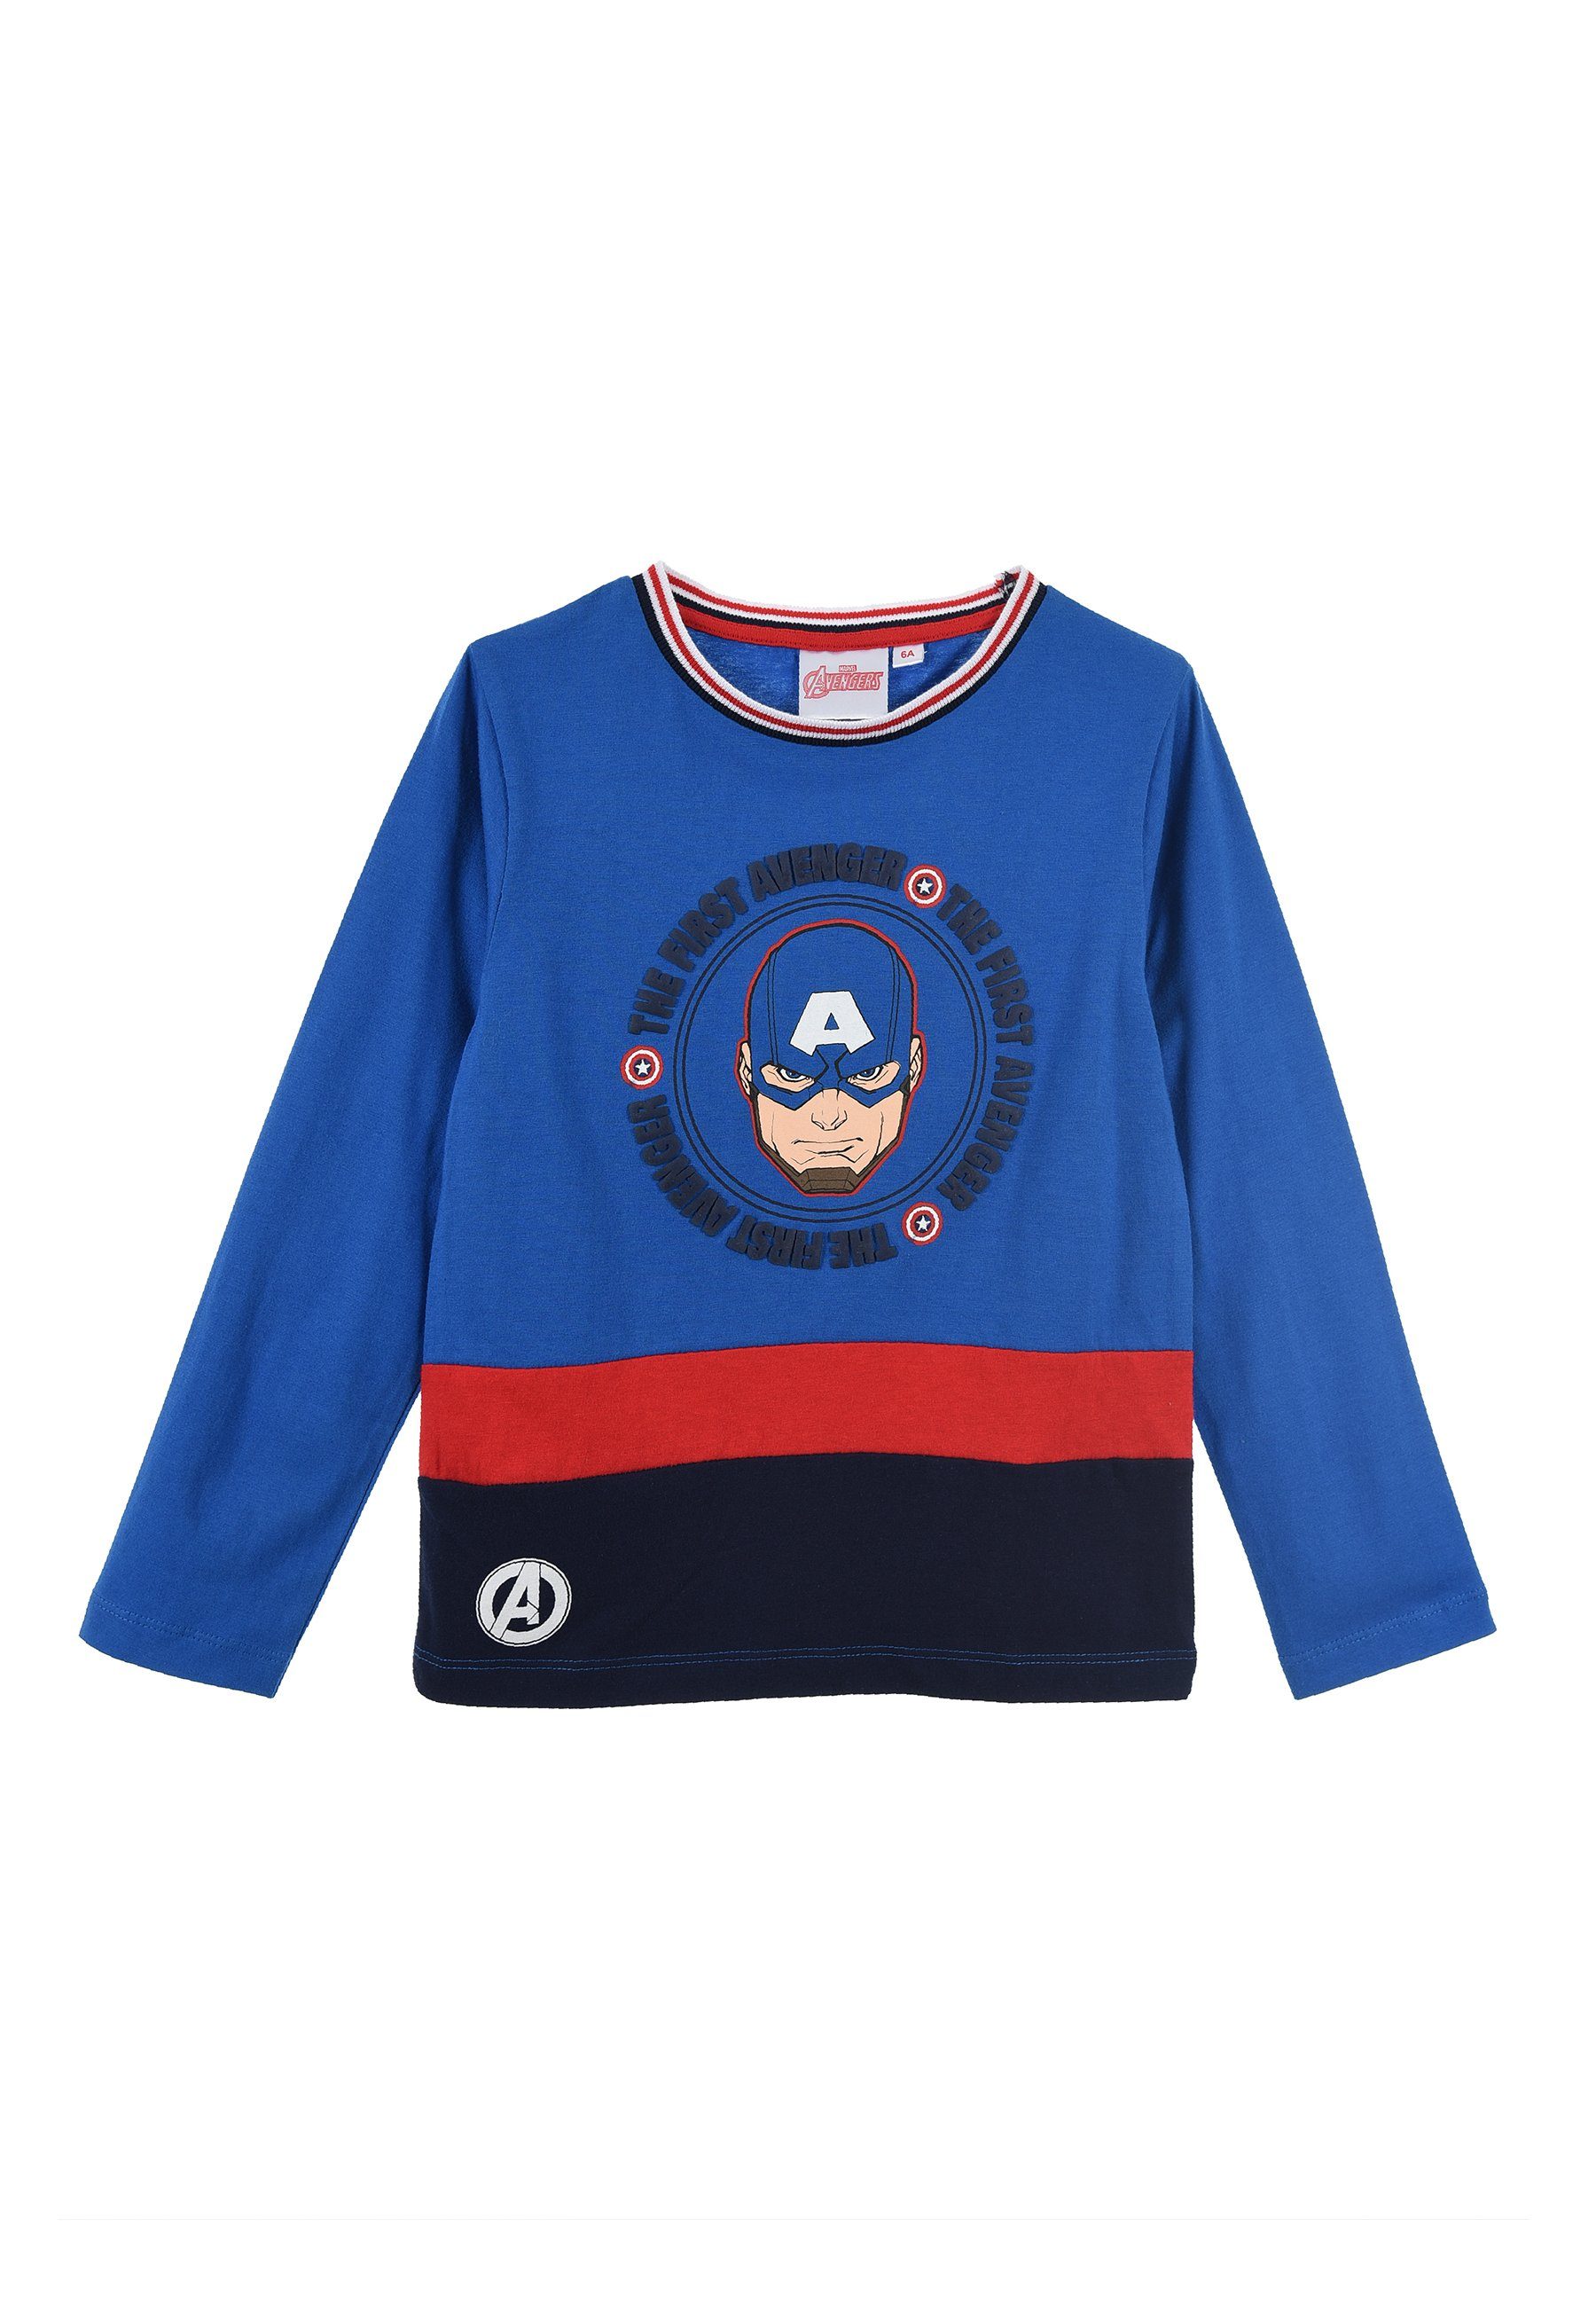 The AVENGERS Langarmshirt Captain America Black Panther Kinder Jungen Longsleeve Shirt Oberteil Blau